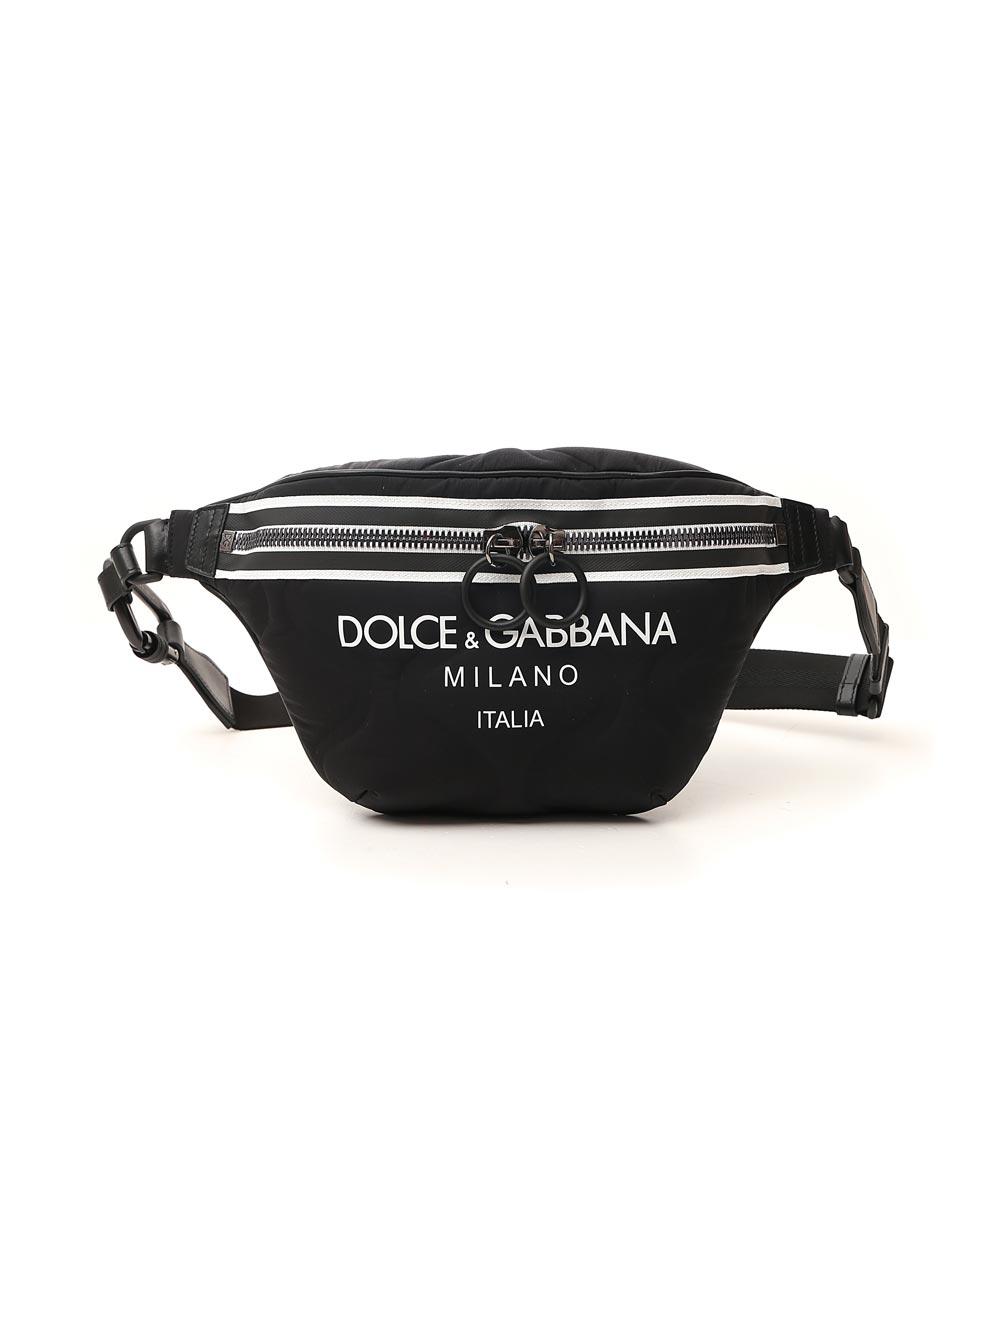 Dolce & Gabbana Synthetic Logo Fanny Pack in Black for Men - Lyst